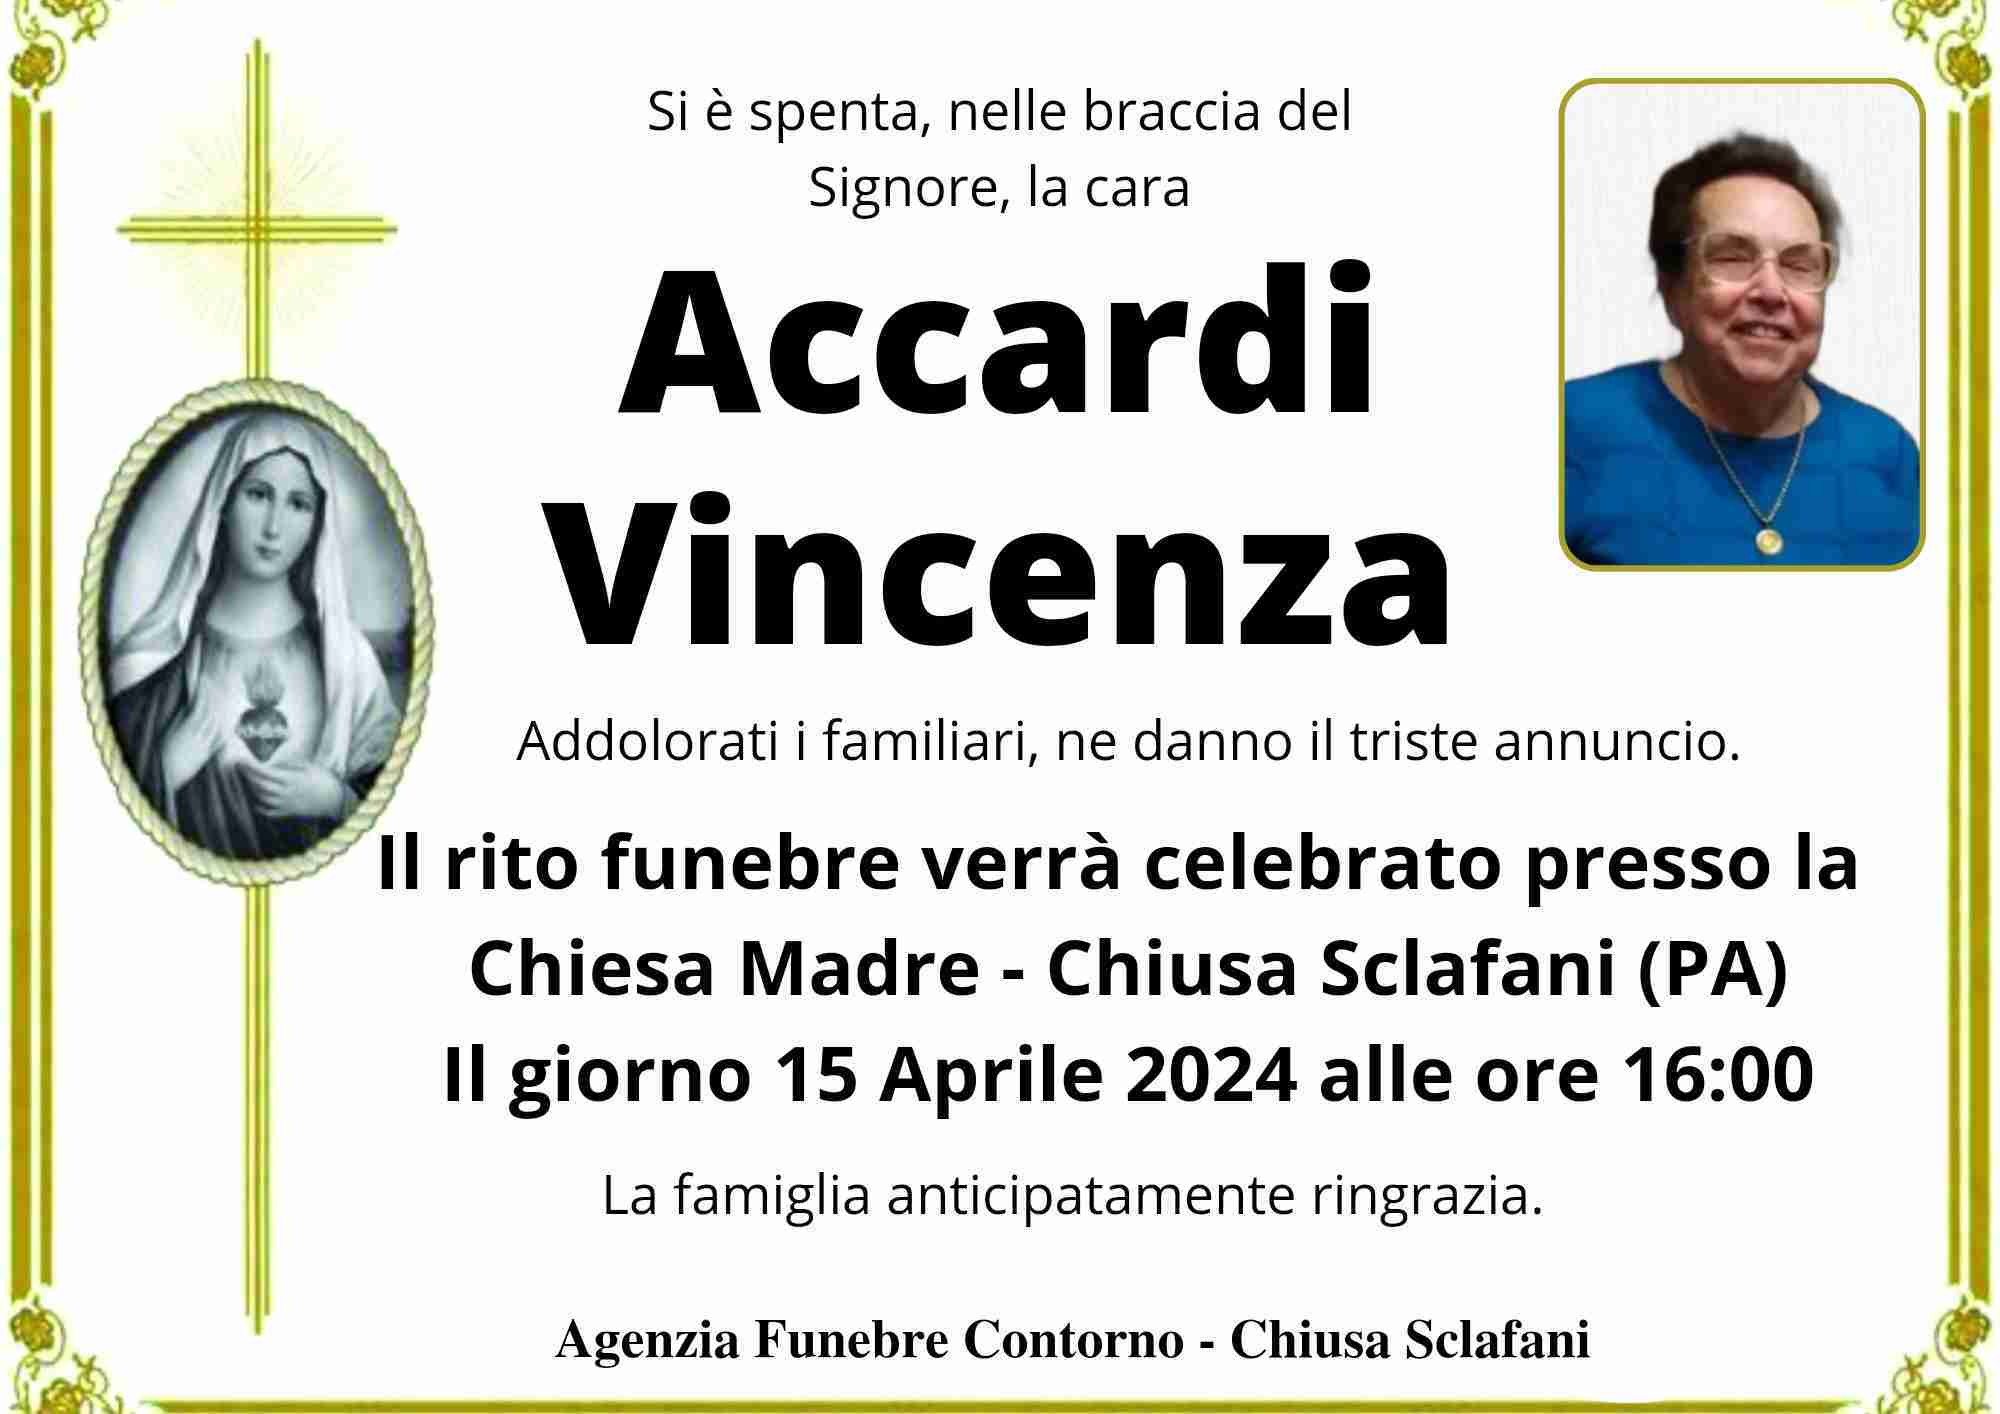 Vincenza Accardi